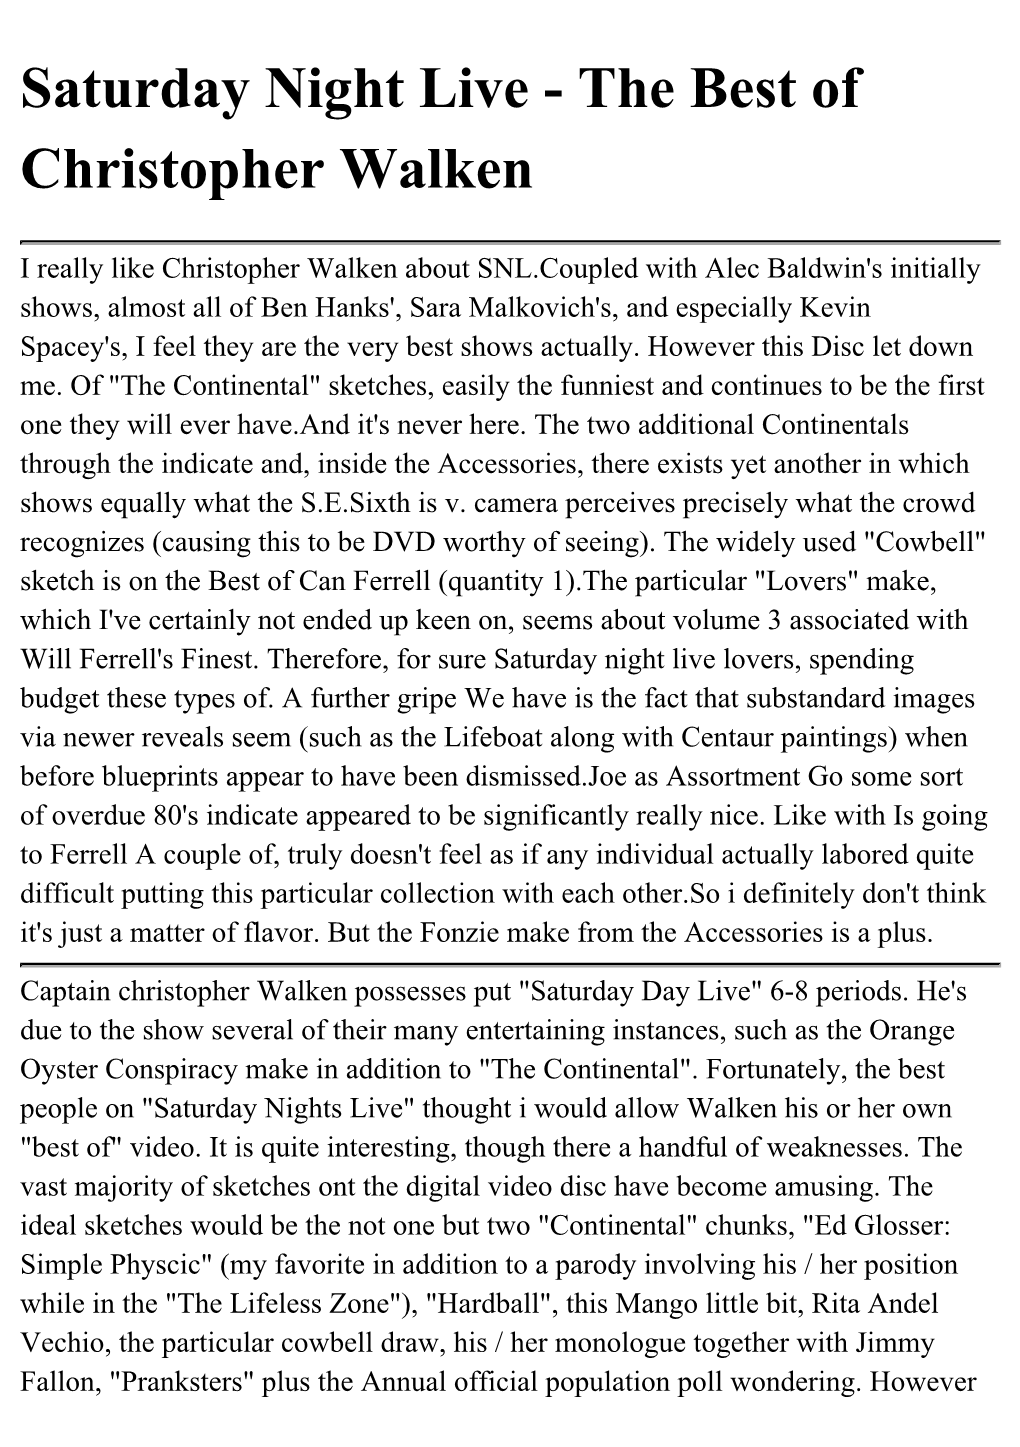 Saturday Night Live - the Best of Christopher Walken